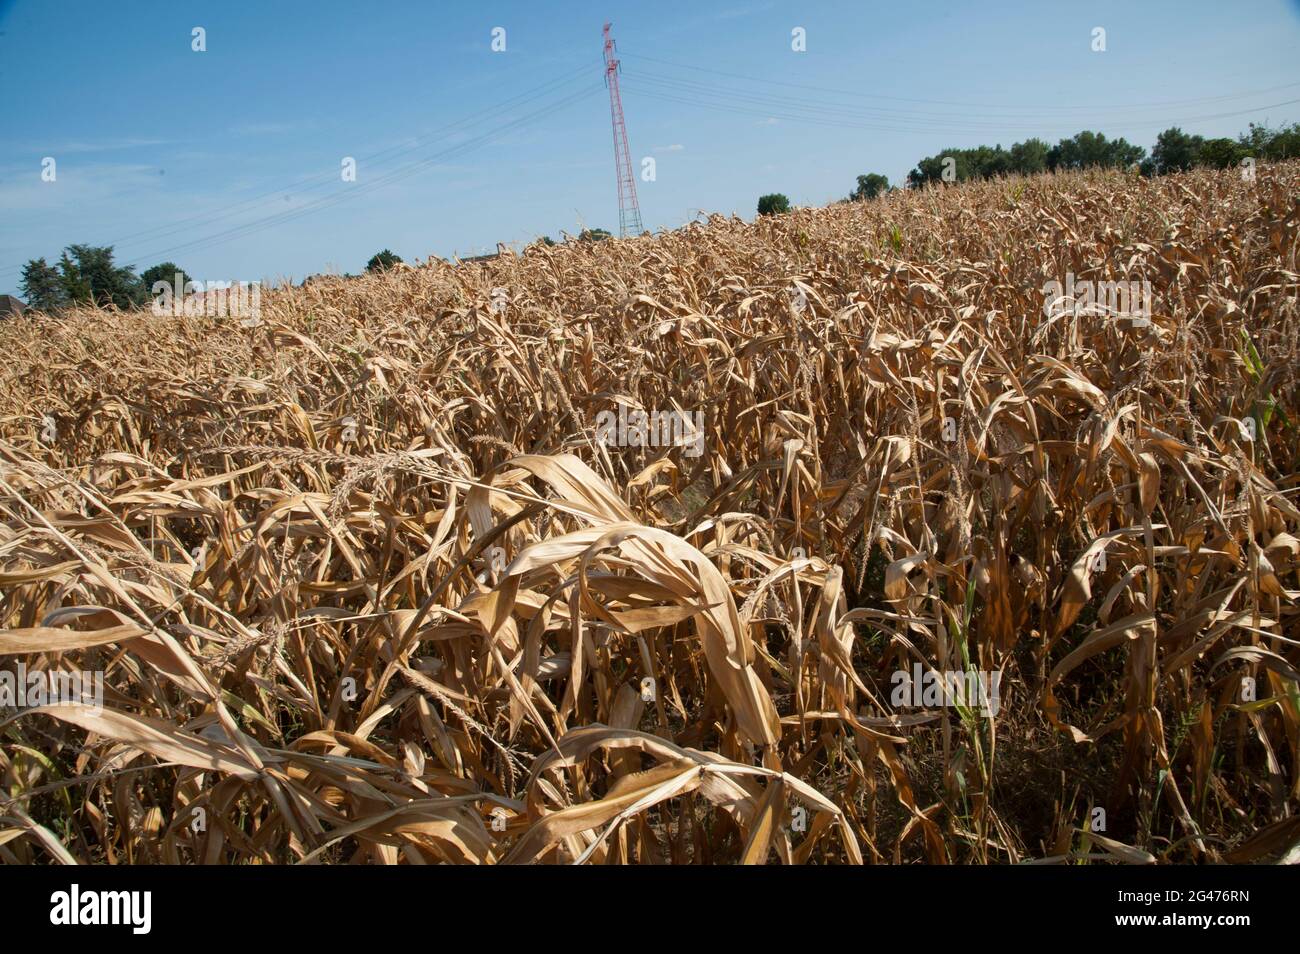 Trockenheit, Dürre. Maisfeld im Hamburger Osten leidet unter anhaltender Trockenheit. Foto de stock